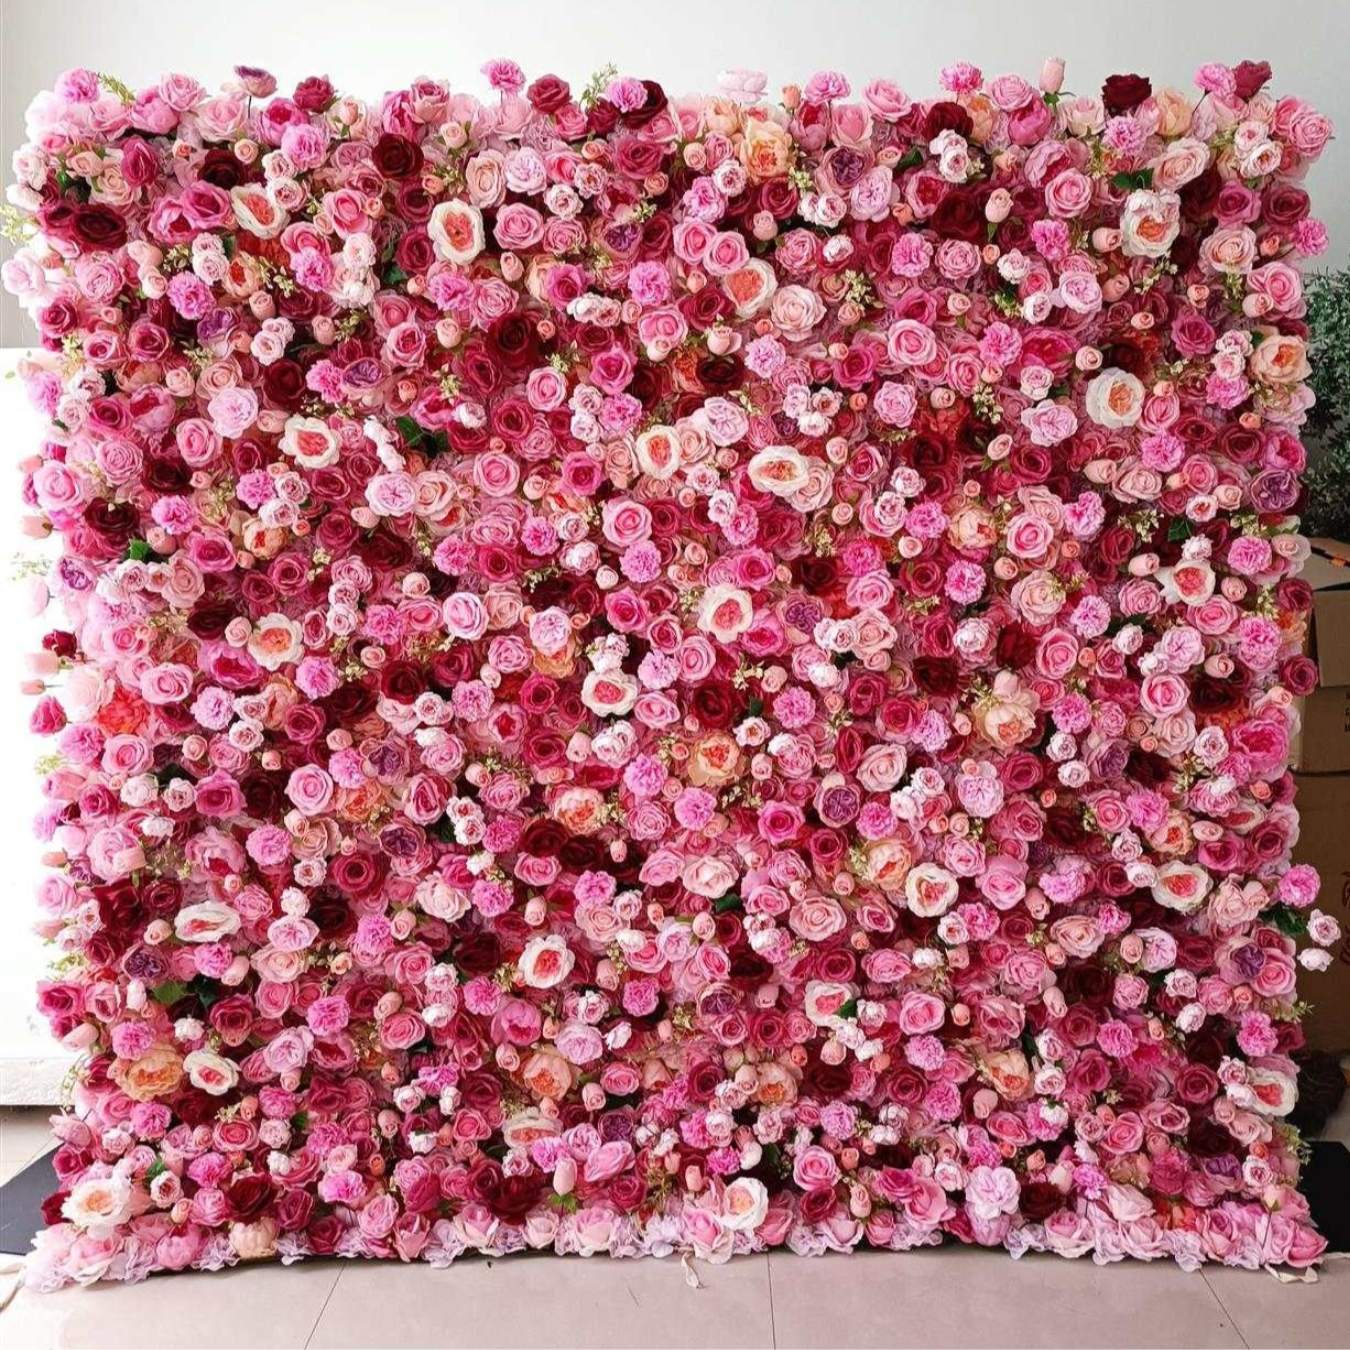 https://marqueelettering.ca/wp-content/uploads/2023/05/full-bloom-flower-wall.jpg